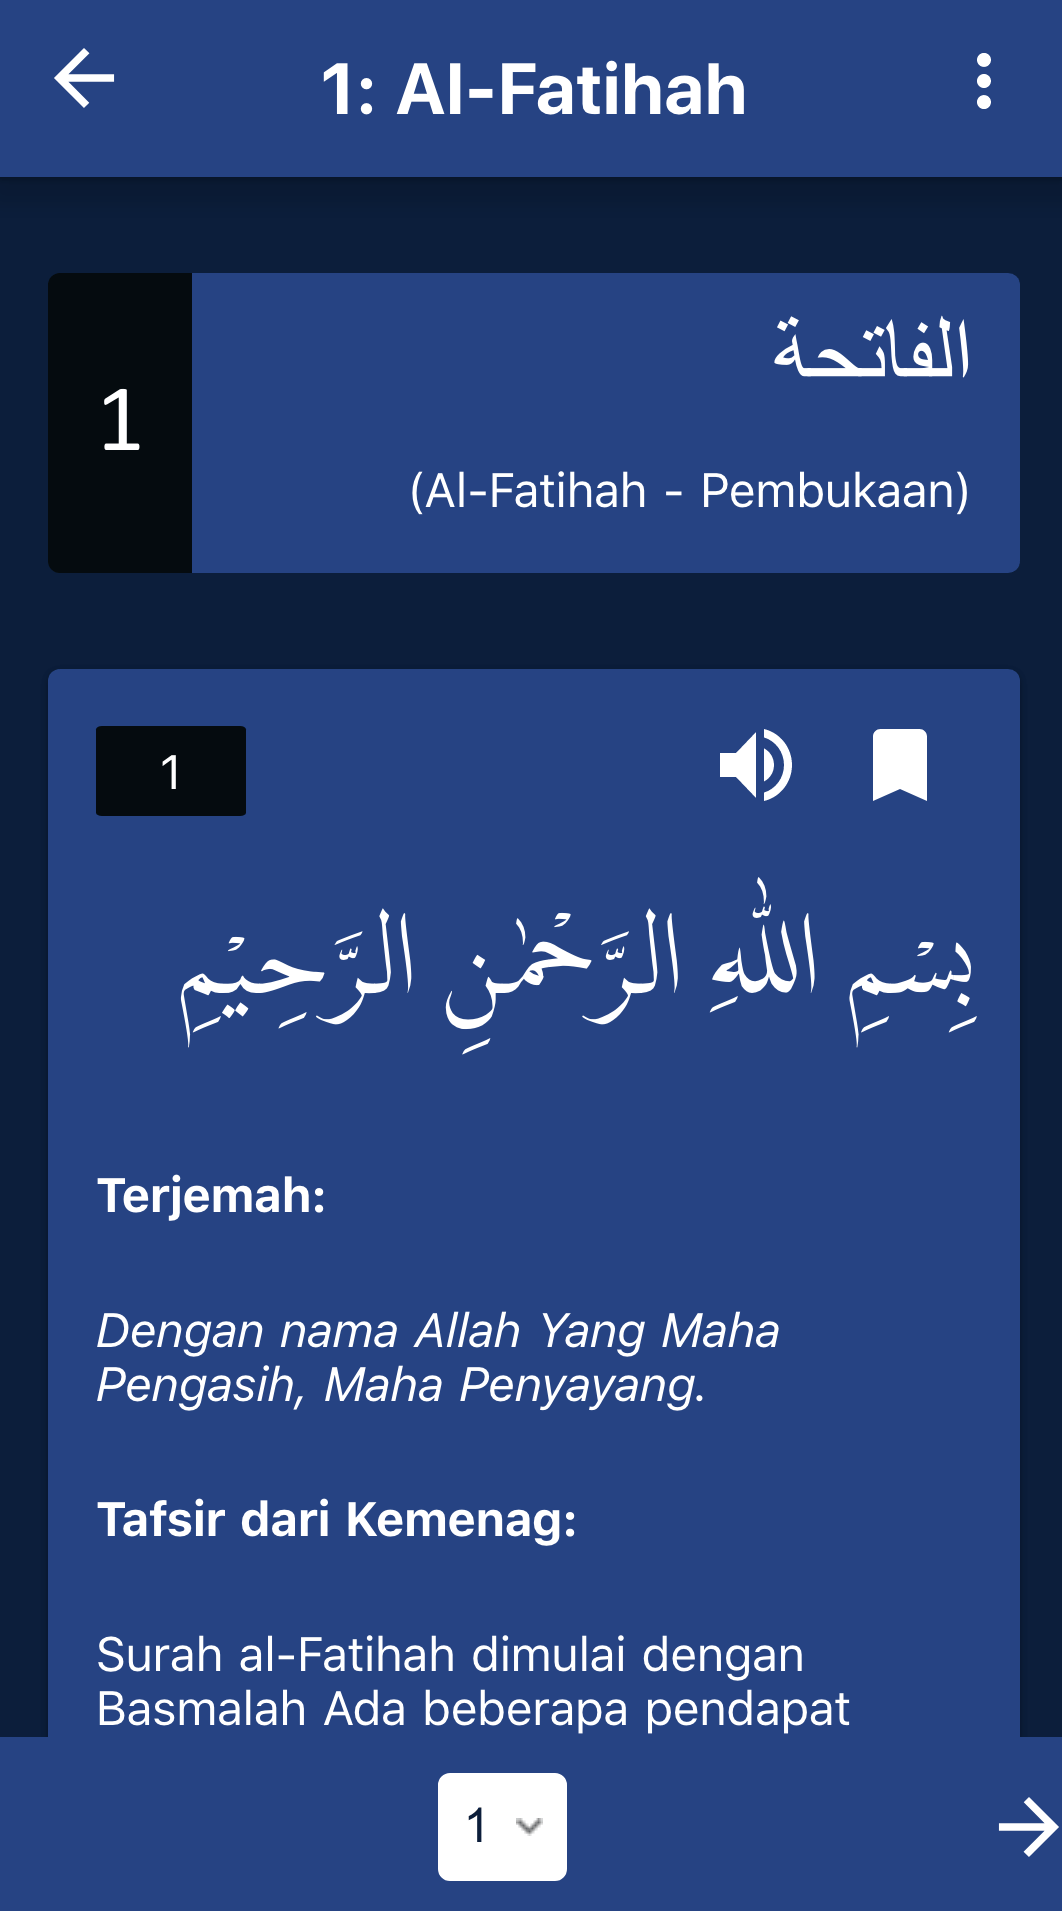 al-fatihah